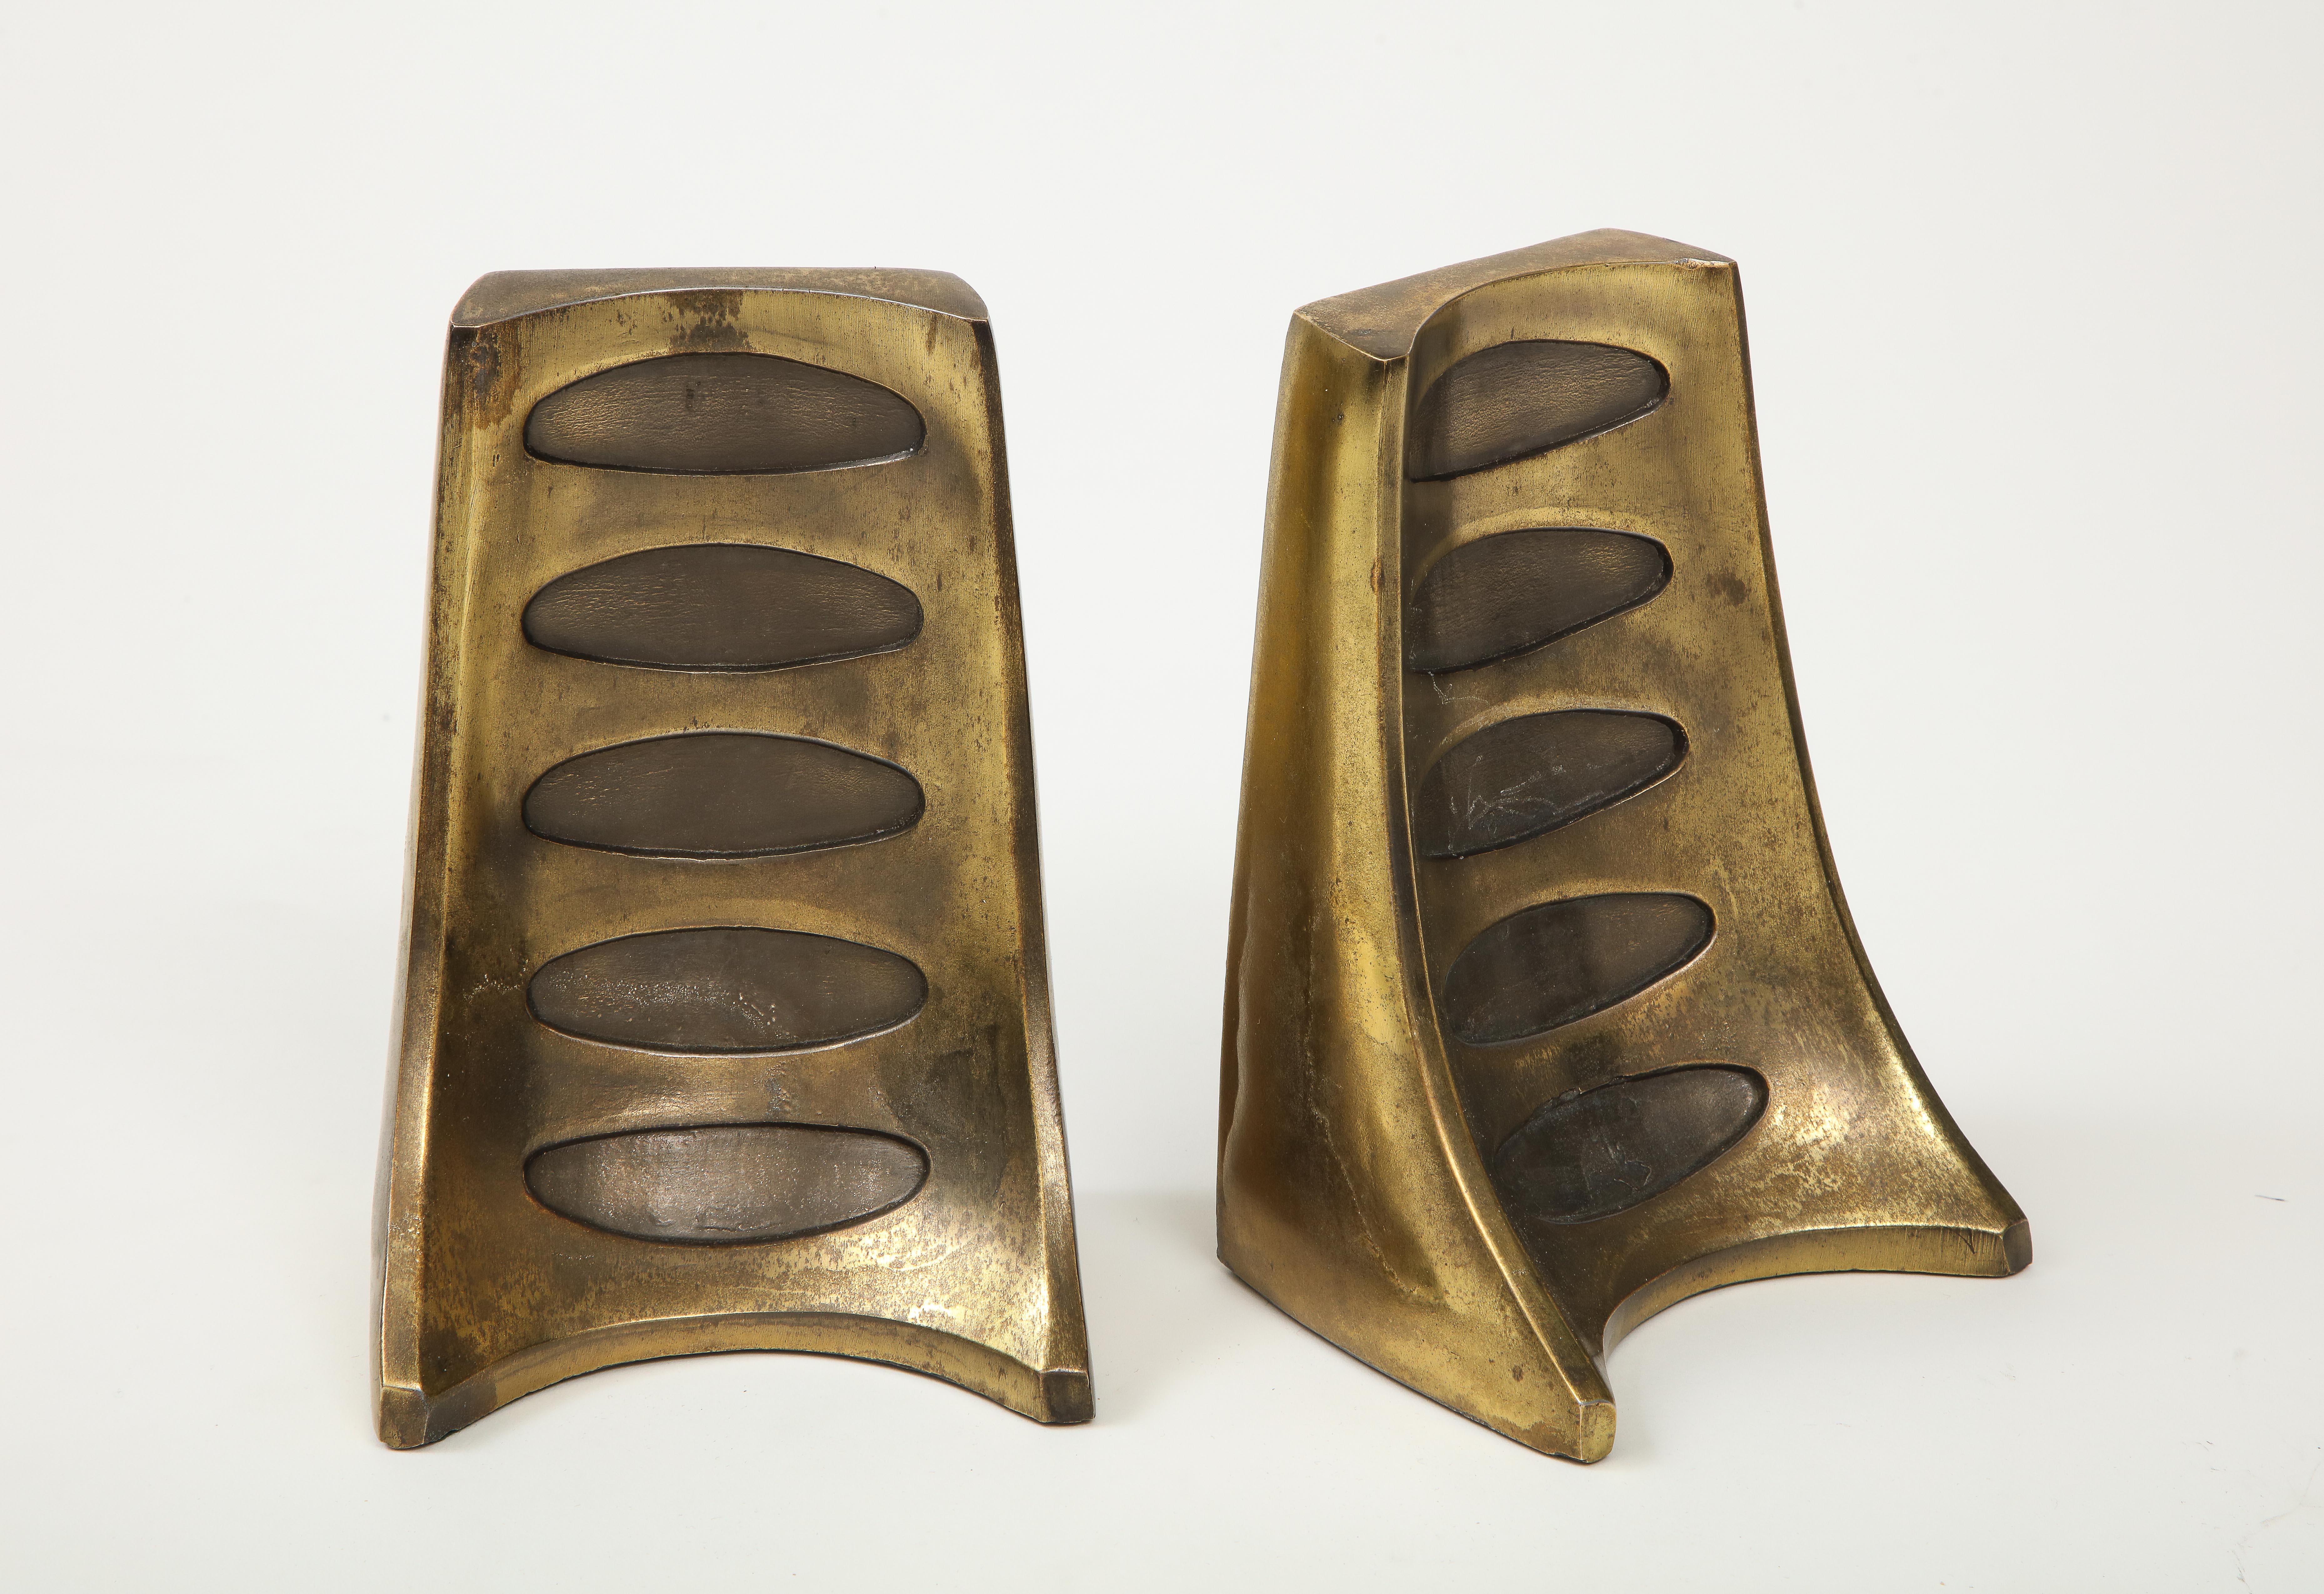 Modernist bronze bookends by Ben Seibel featuring a modified tail light design.